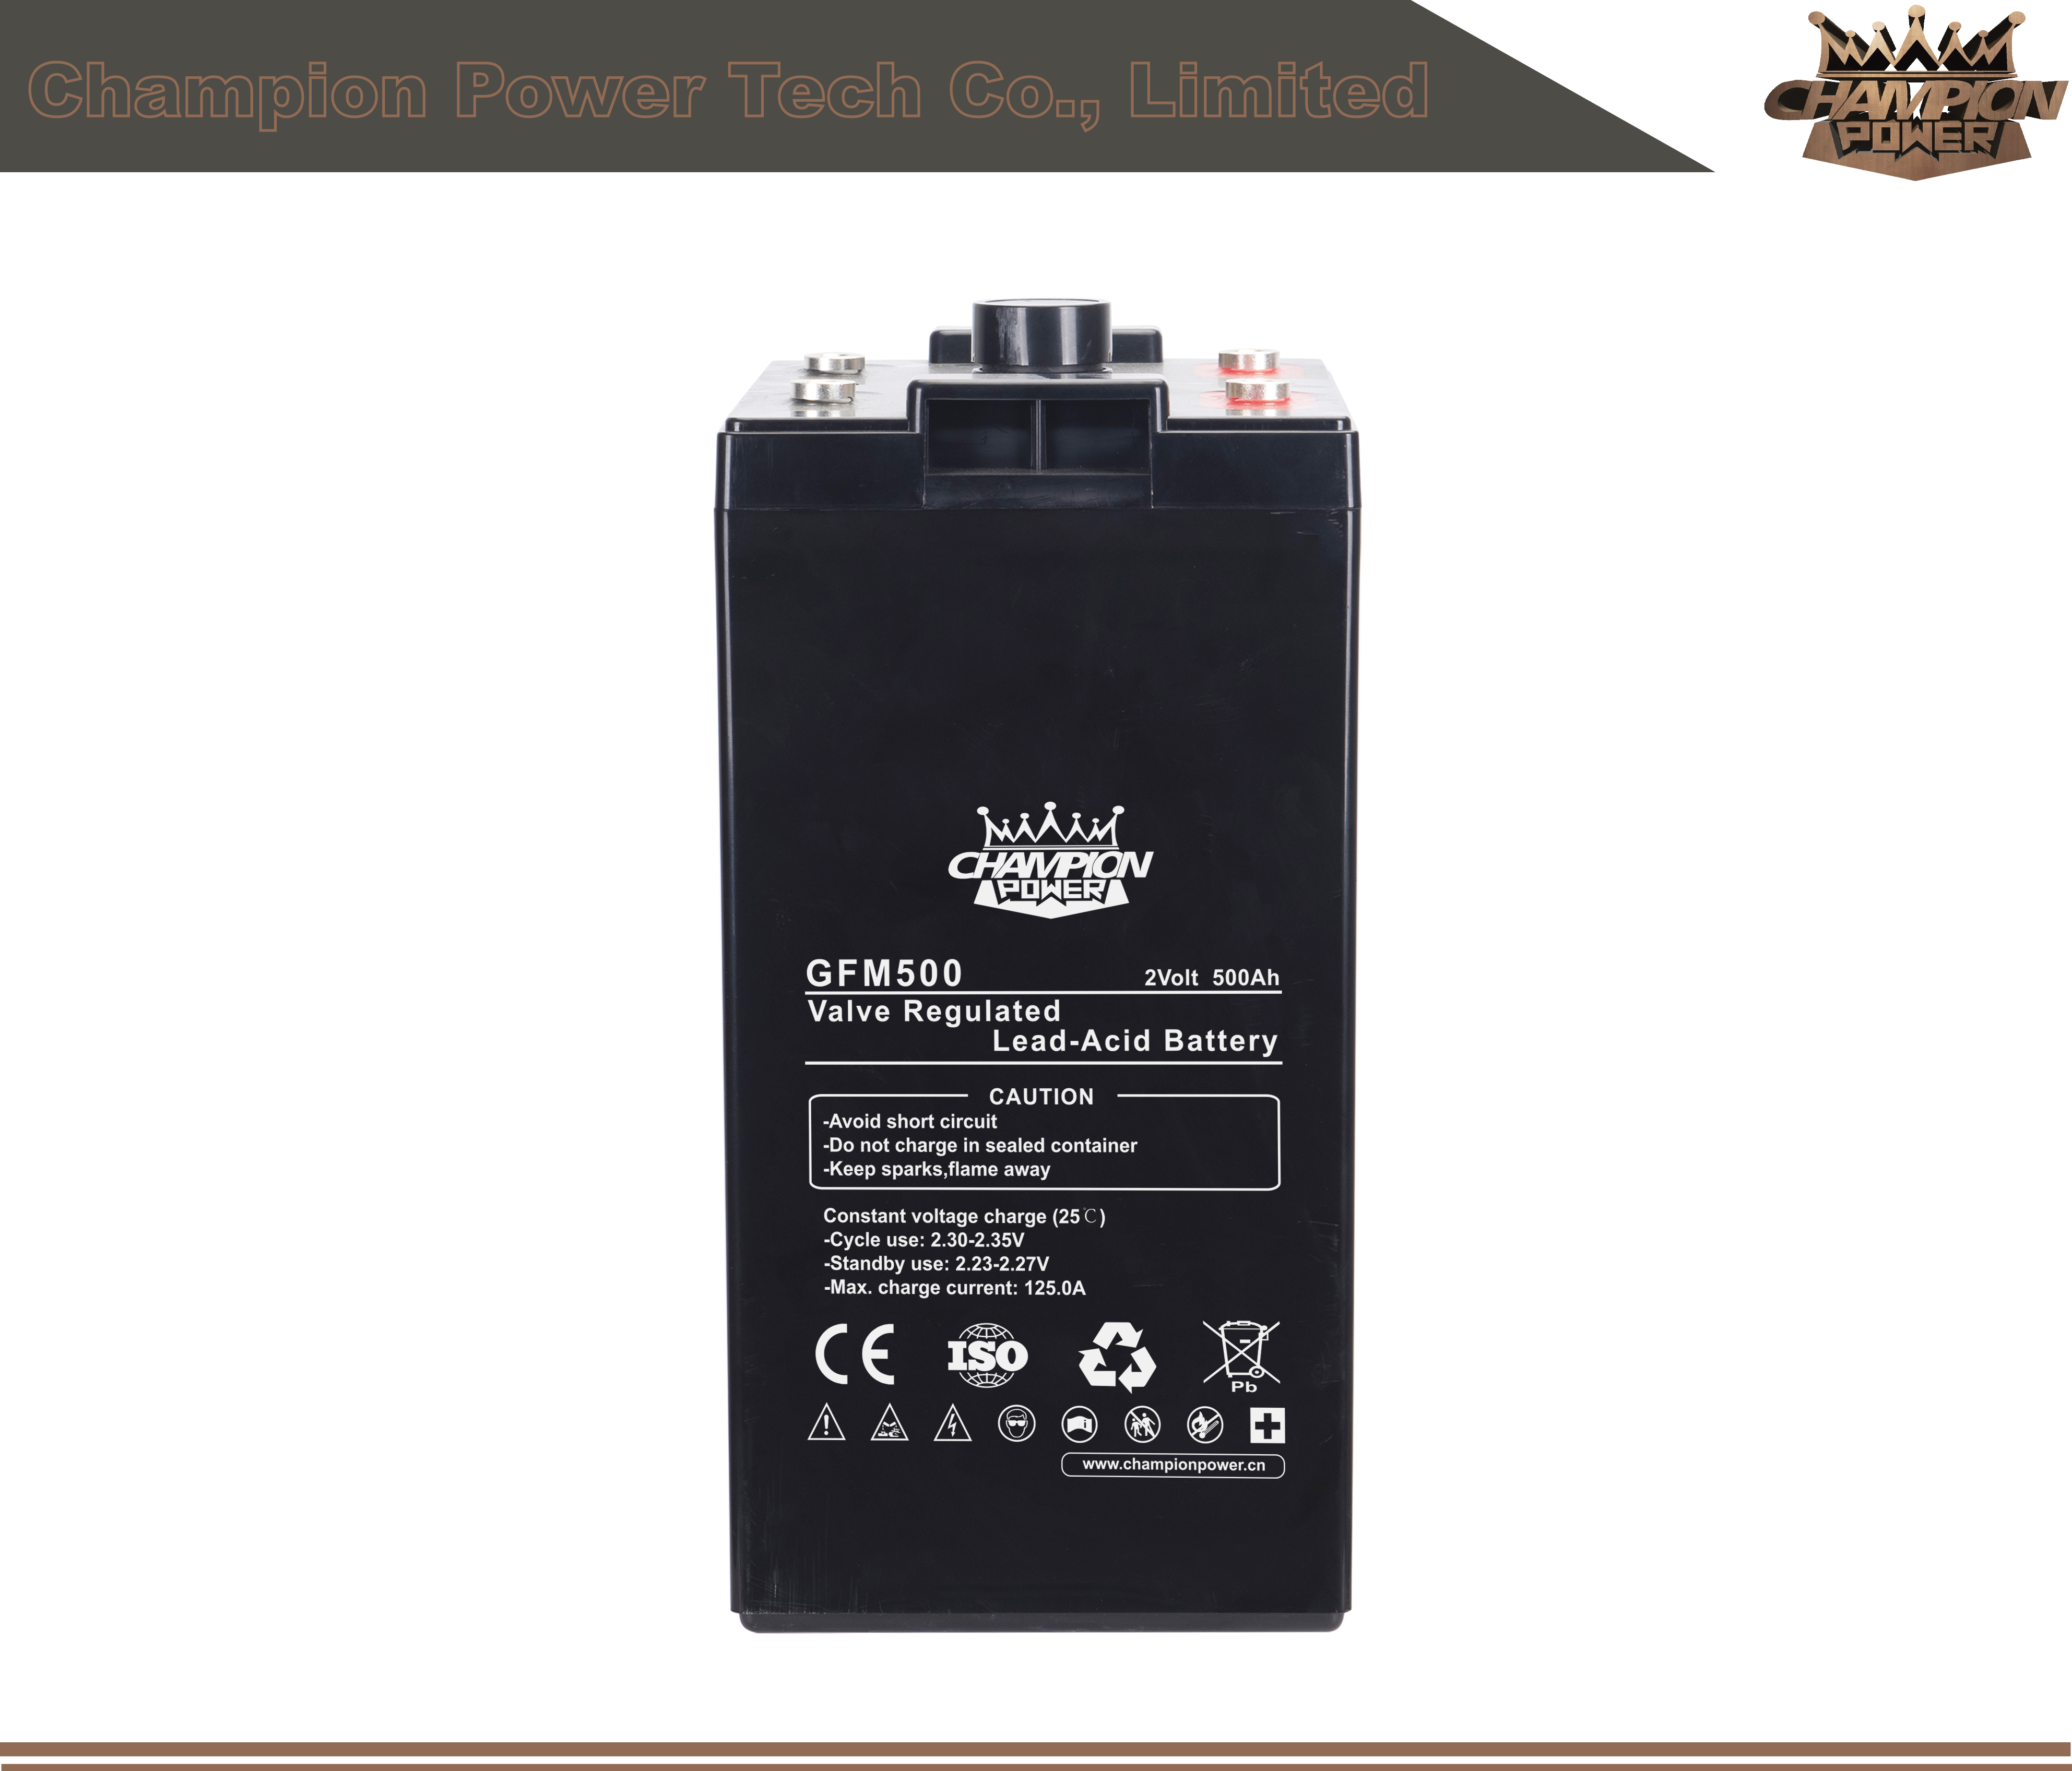 GFM500 2V500Ah Lead Acid Battery